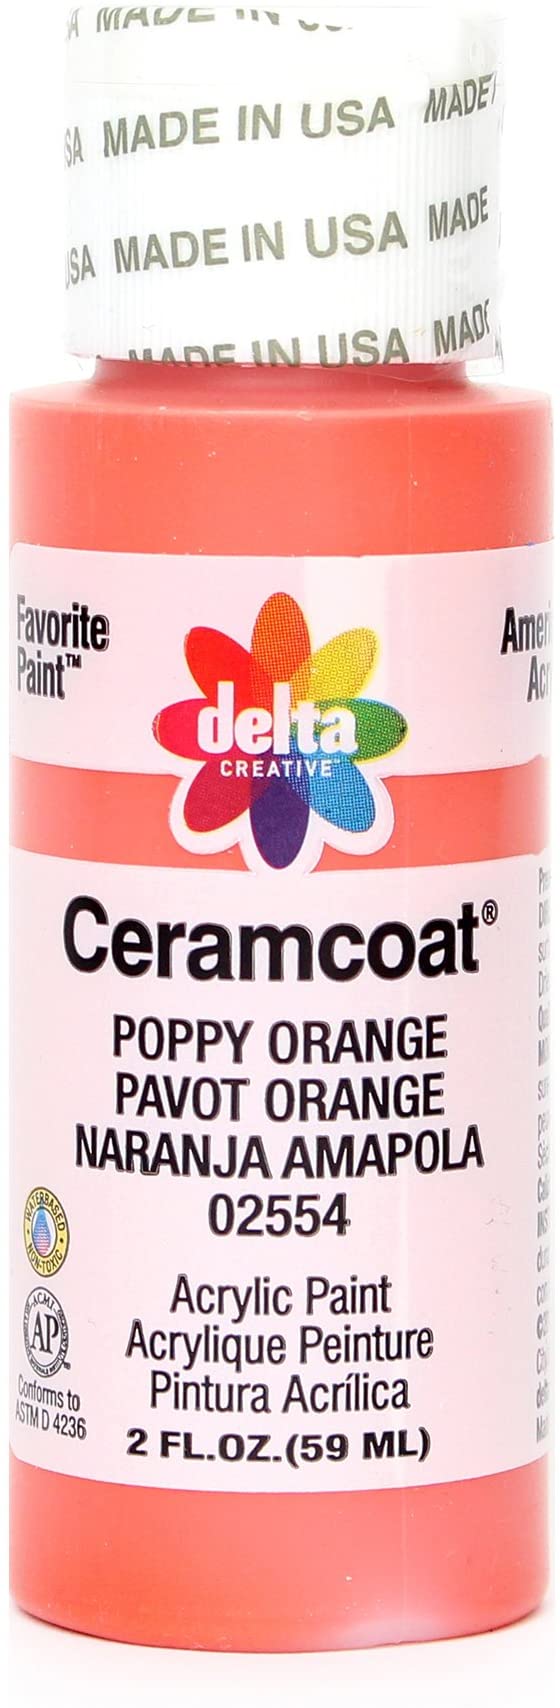 CERAMCOAT Acrylic Paint 59ml 2floz  - Poppy Orange